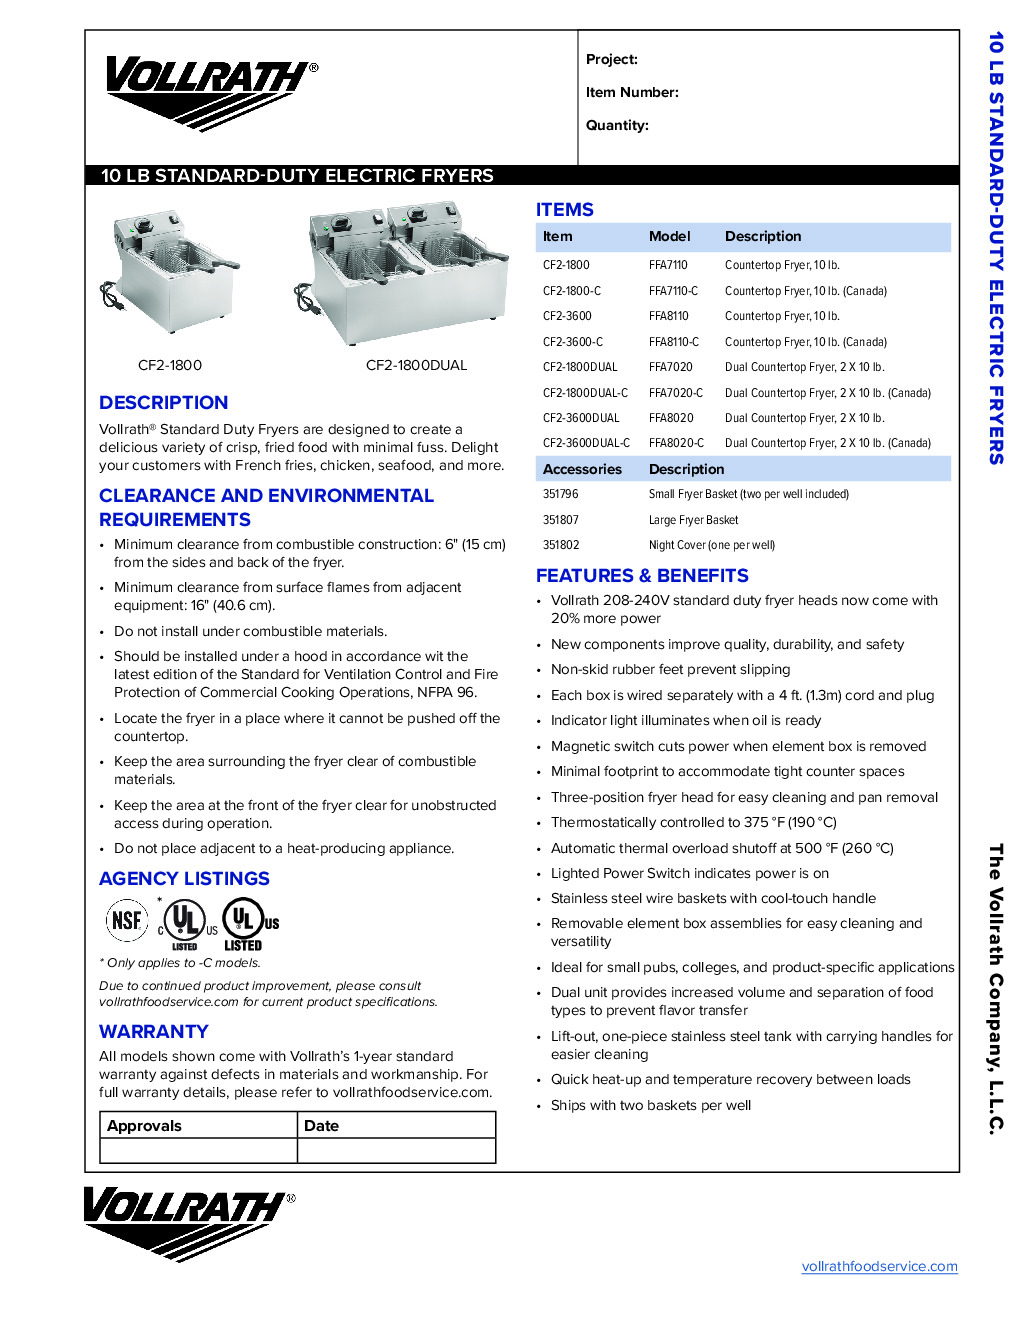 Vollrath CF2-1800DUAL Split Pot Countertop Electric Fryer w/ 4 Small Baskets, 20-Lb. Capacity